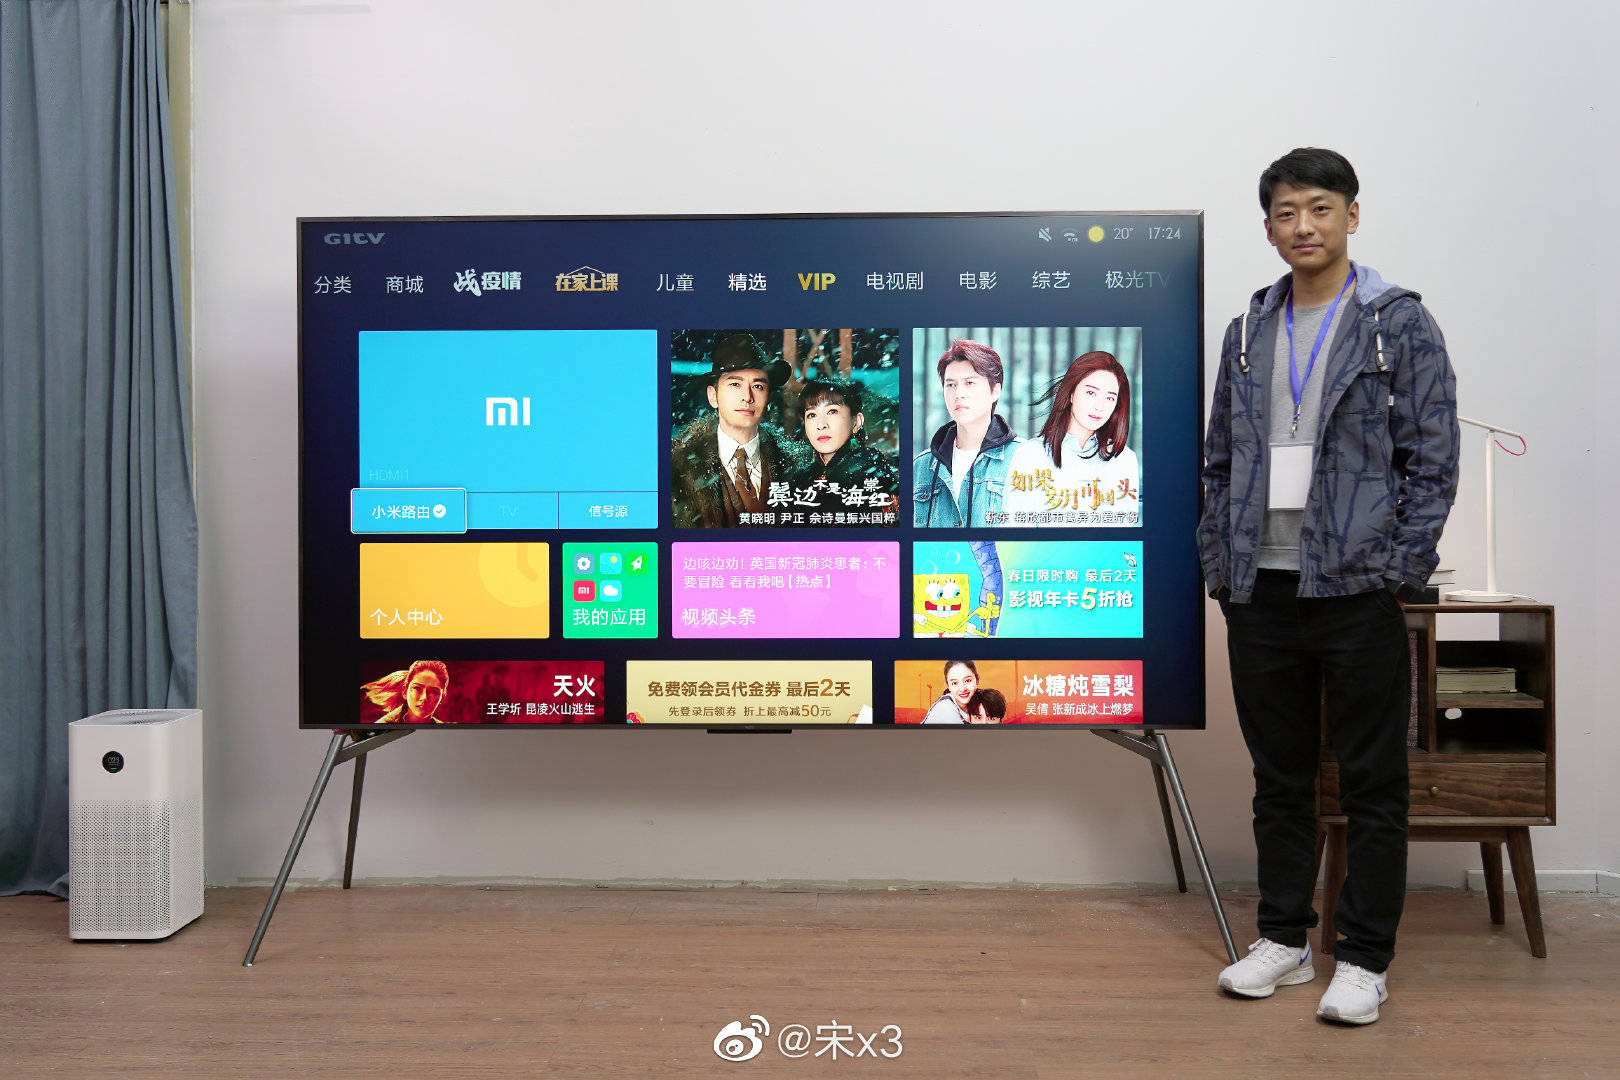 Телевизор 98 см. Xiaomi 98 дюймов телевизор. Телевизор Xiaomi mi Redmi Smart TV Max 98. Xiaomi Redmi Max 98 телевизор. 98 Телевизор Xiaomi Redmi Smart TV Max 98.